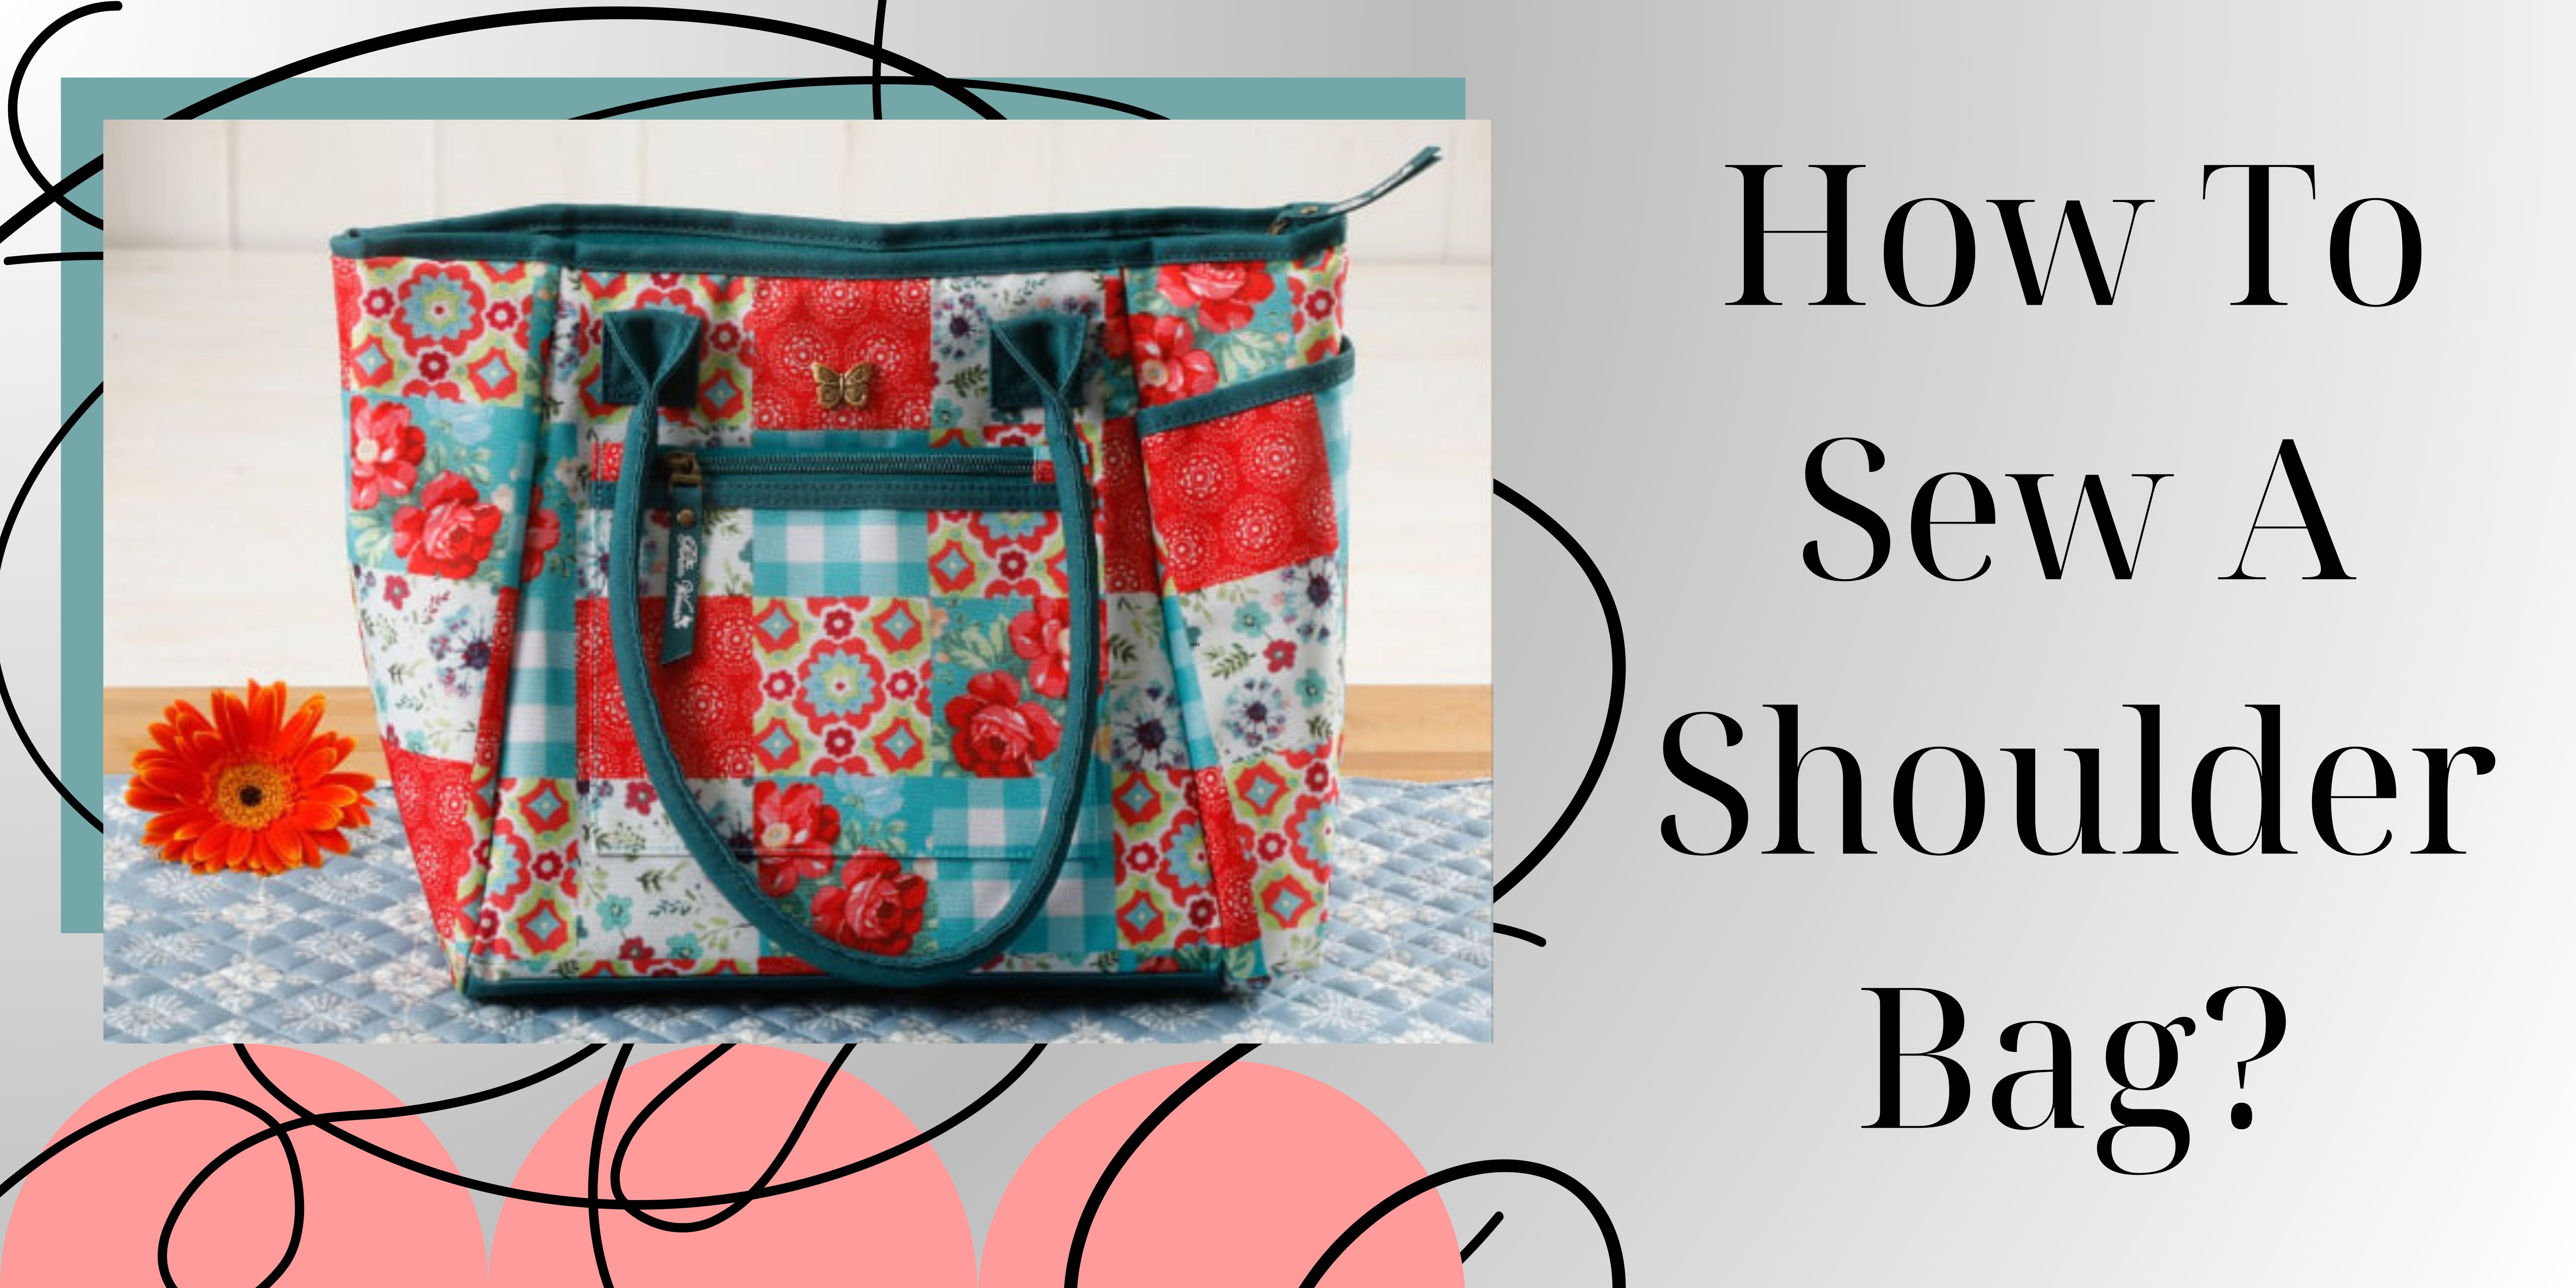 How To Sew A Shoulder Bag?